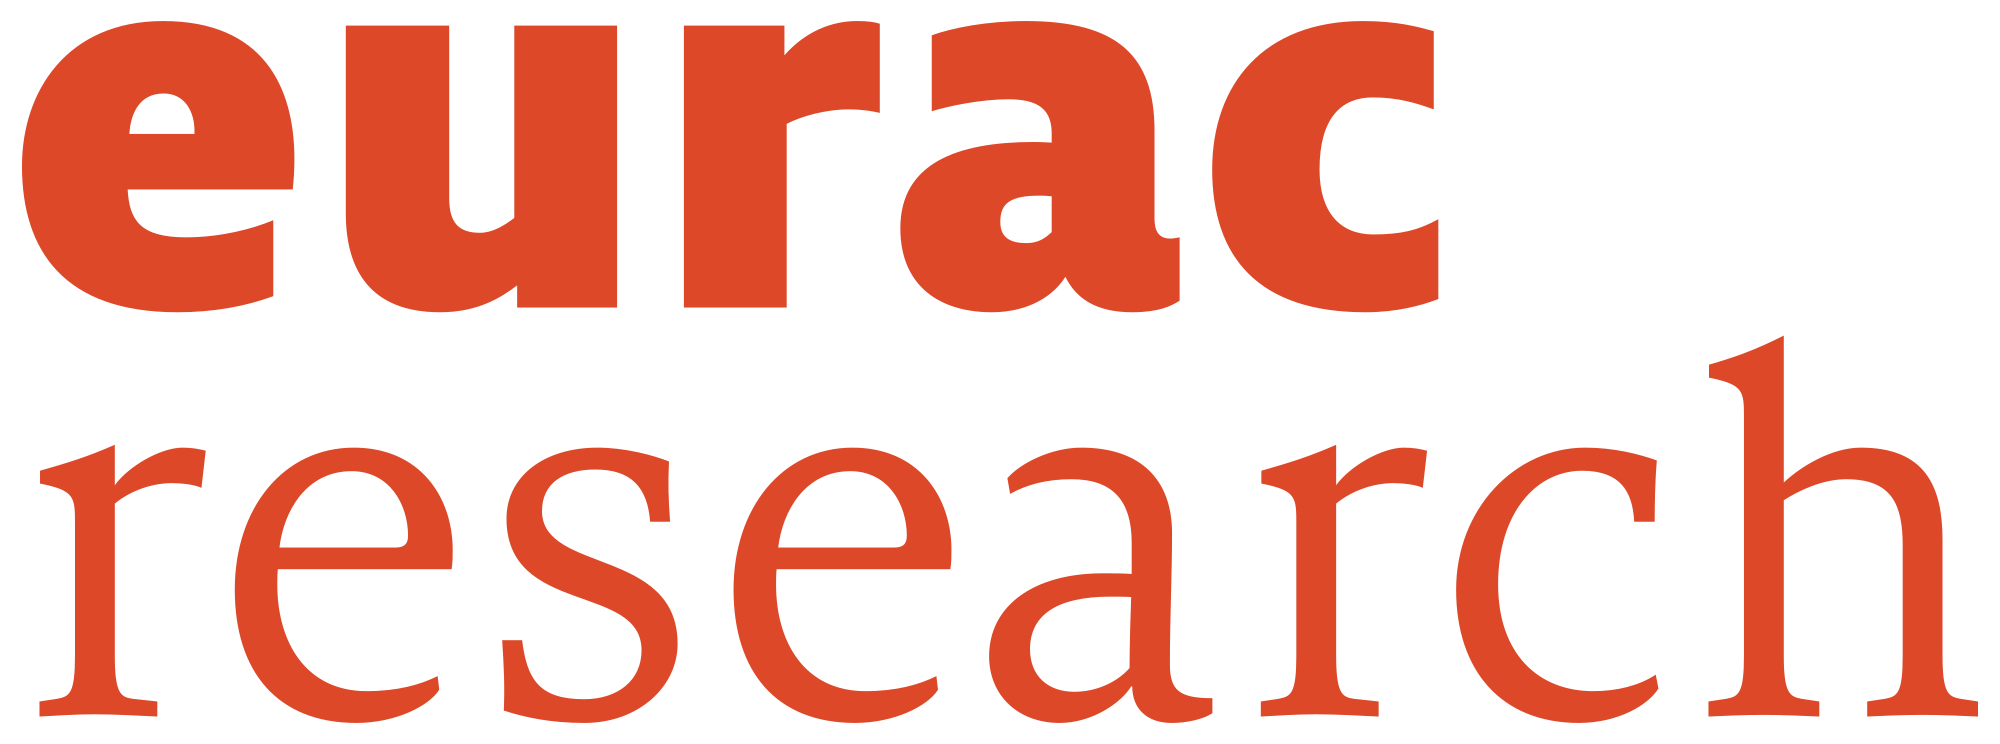 EURAC logo